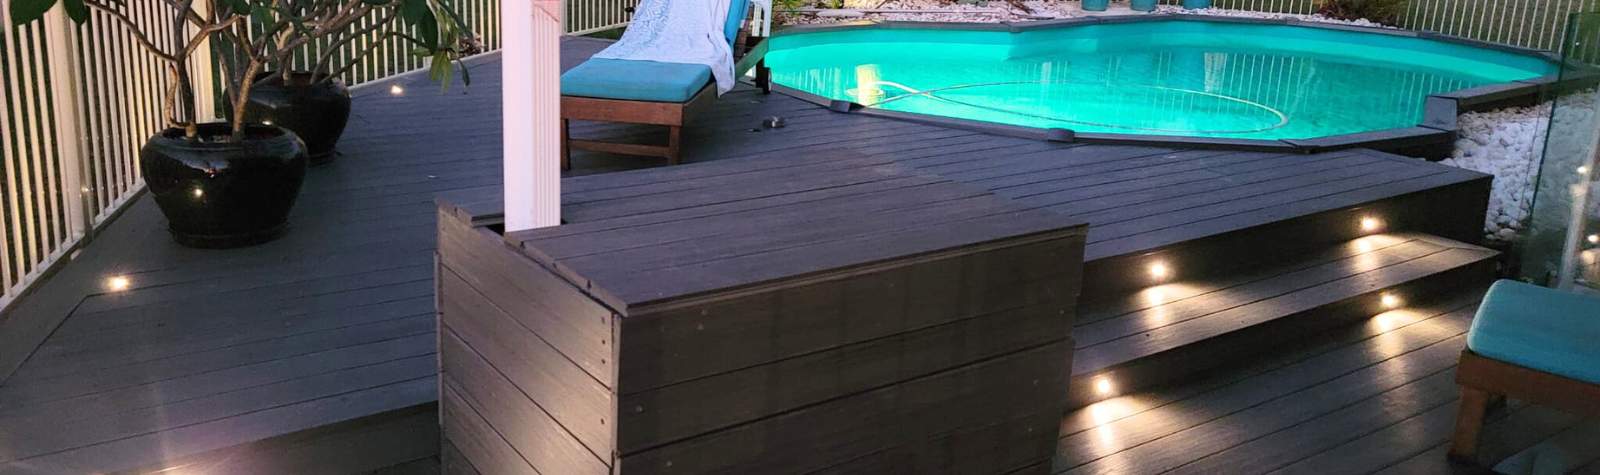 Resort Style Backyard Pool Deck